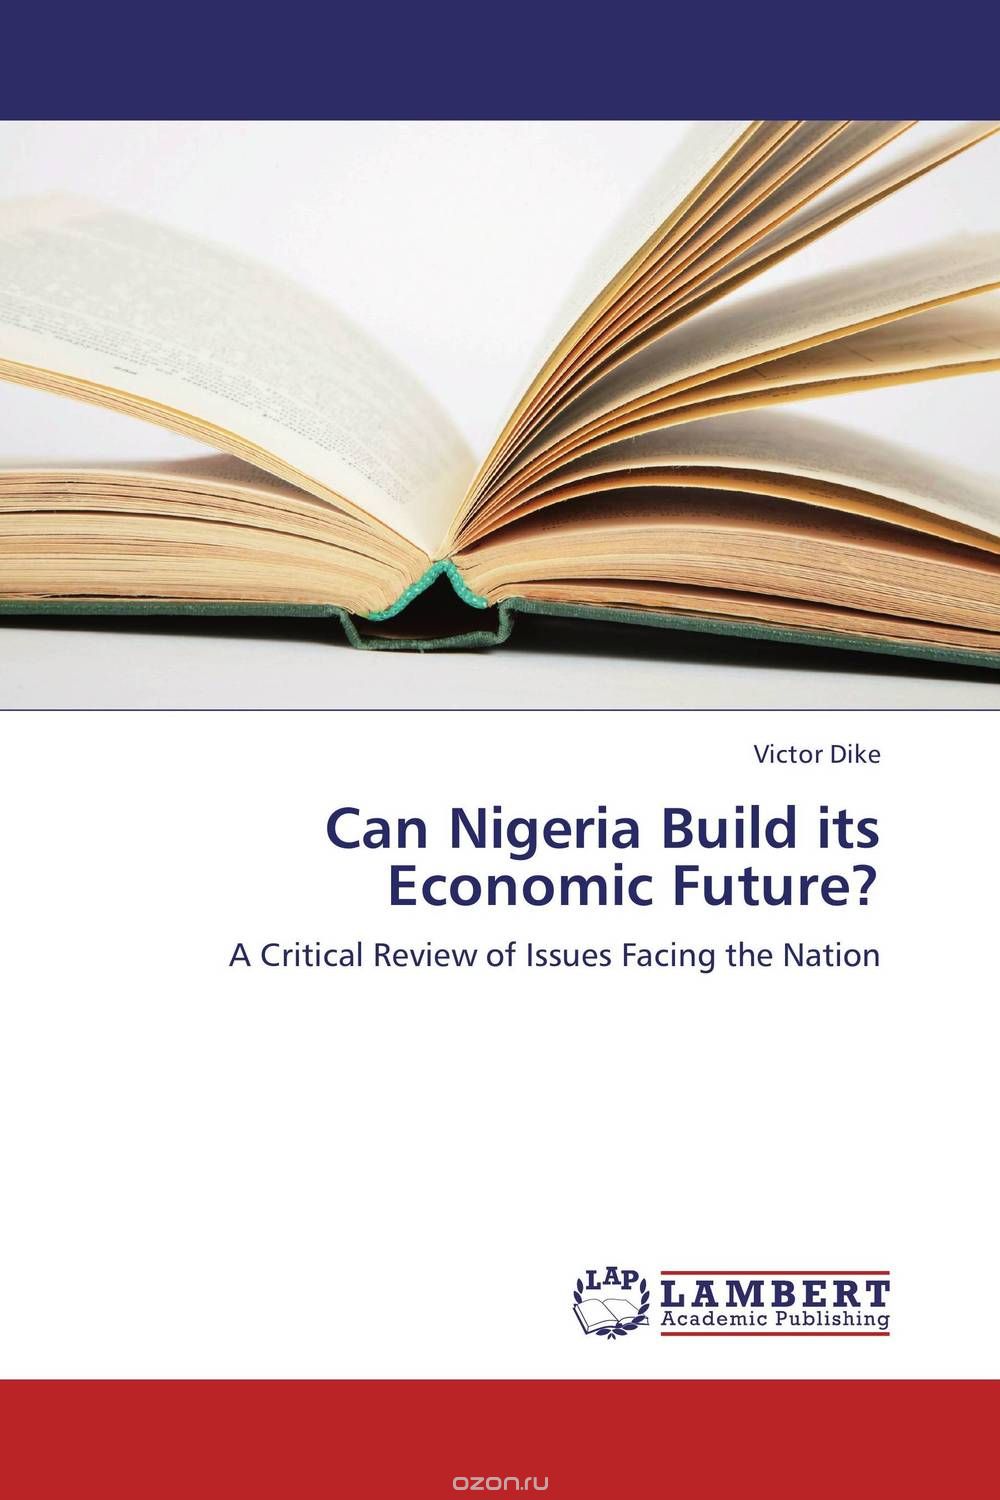 Can Nigeria Build its Economic Future?